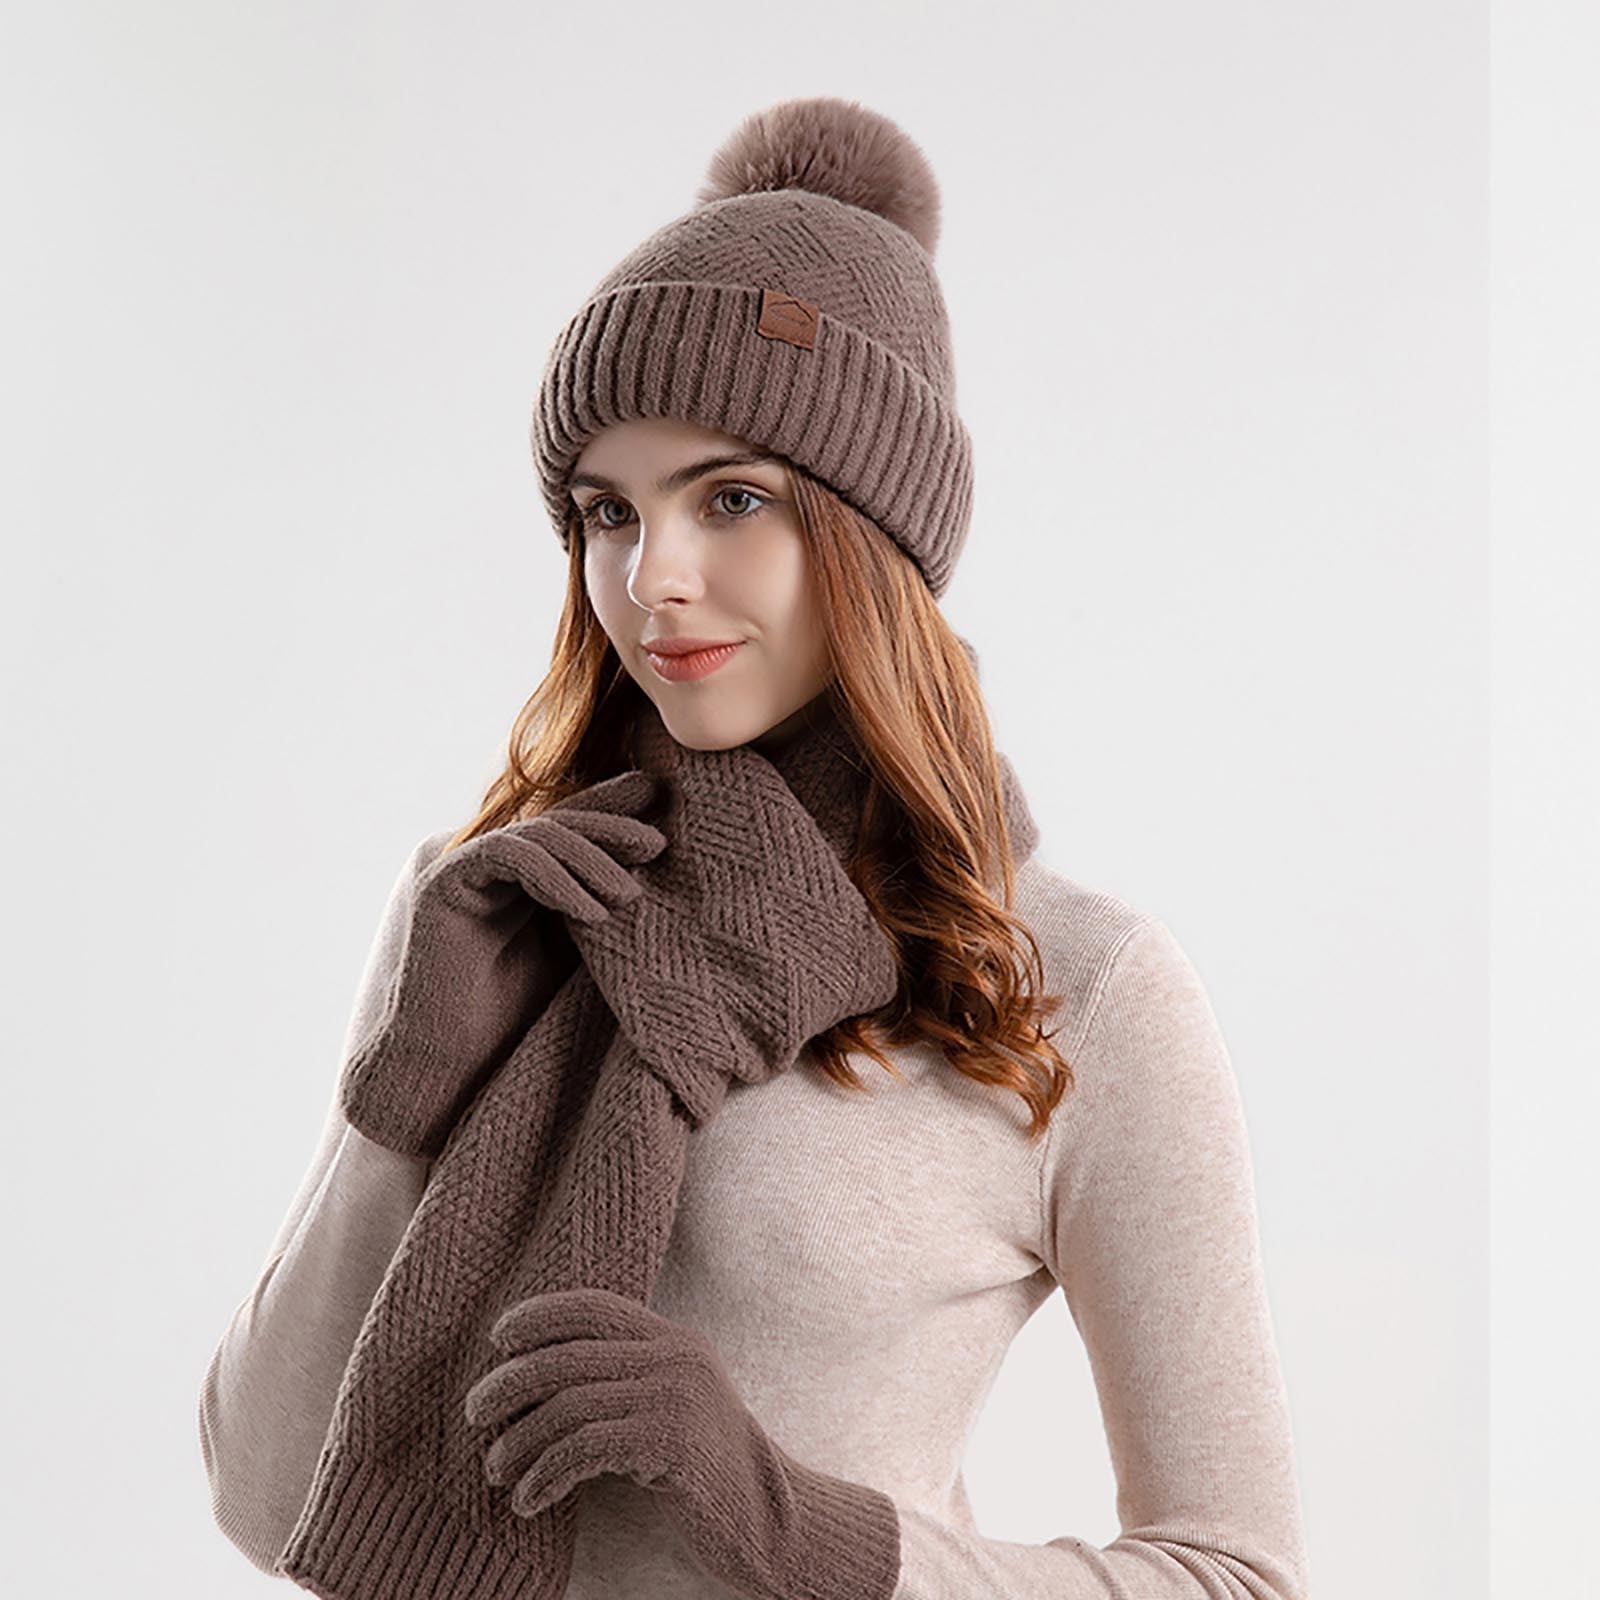 Maylisacc 3 Pcs Warm Winter Knit Hat Scarf and Glove Set for Men Women Tech Touchscreen Gloves Black, Women's, Size: One Size